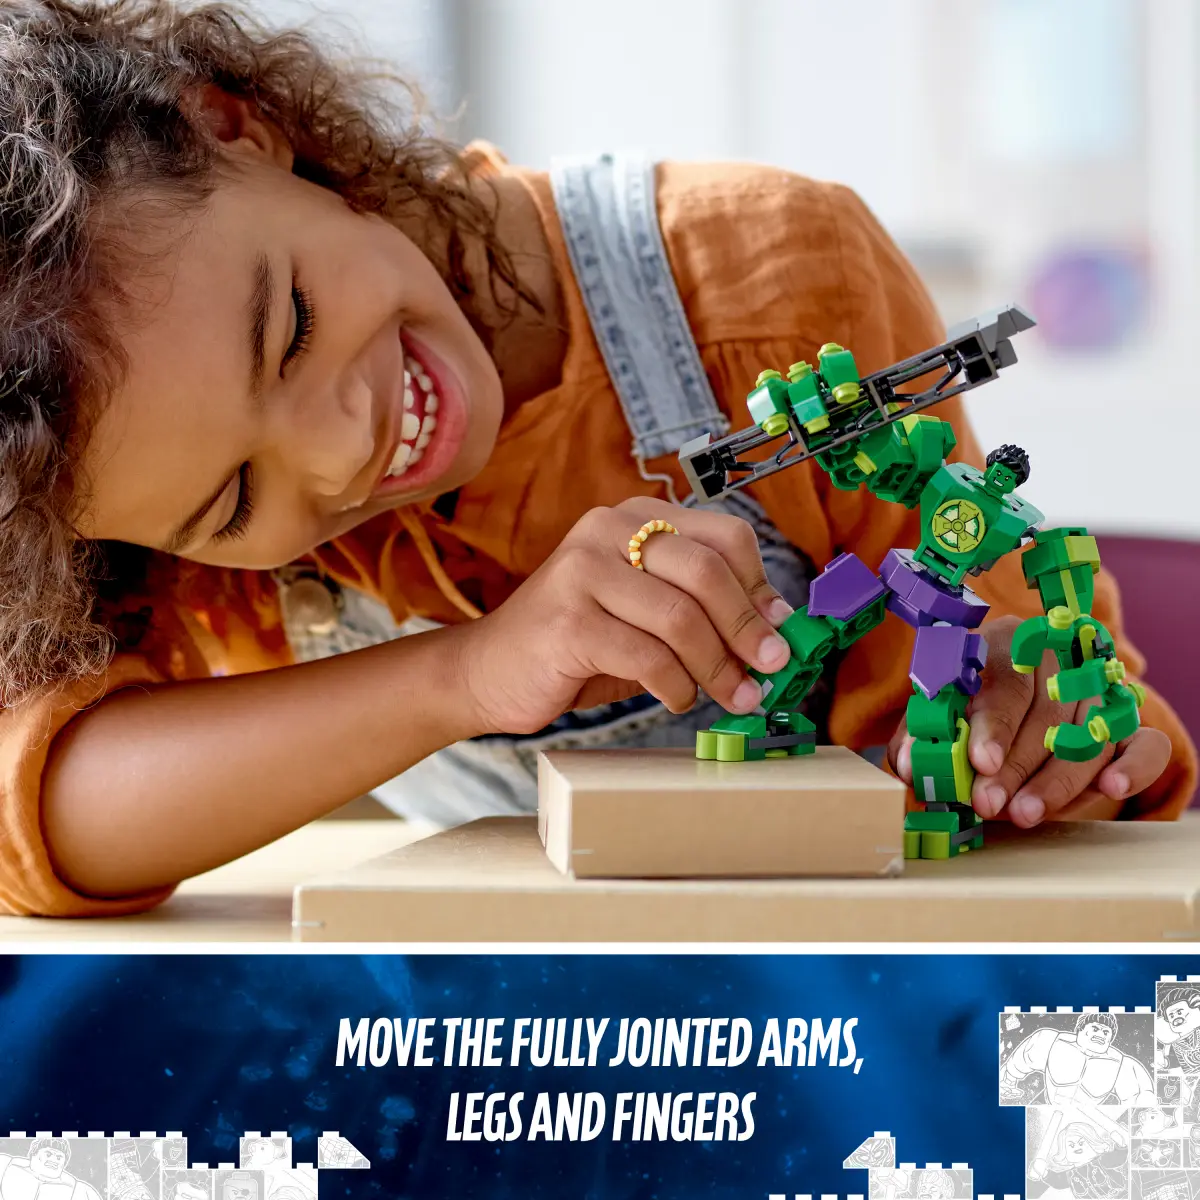 LEGO Hulk Mech Armor Building Block Kit, Multicolour, 6Y+